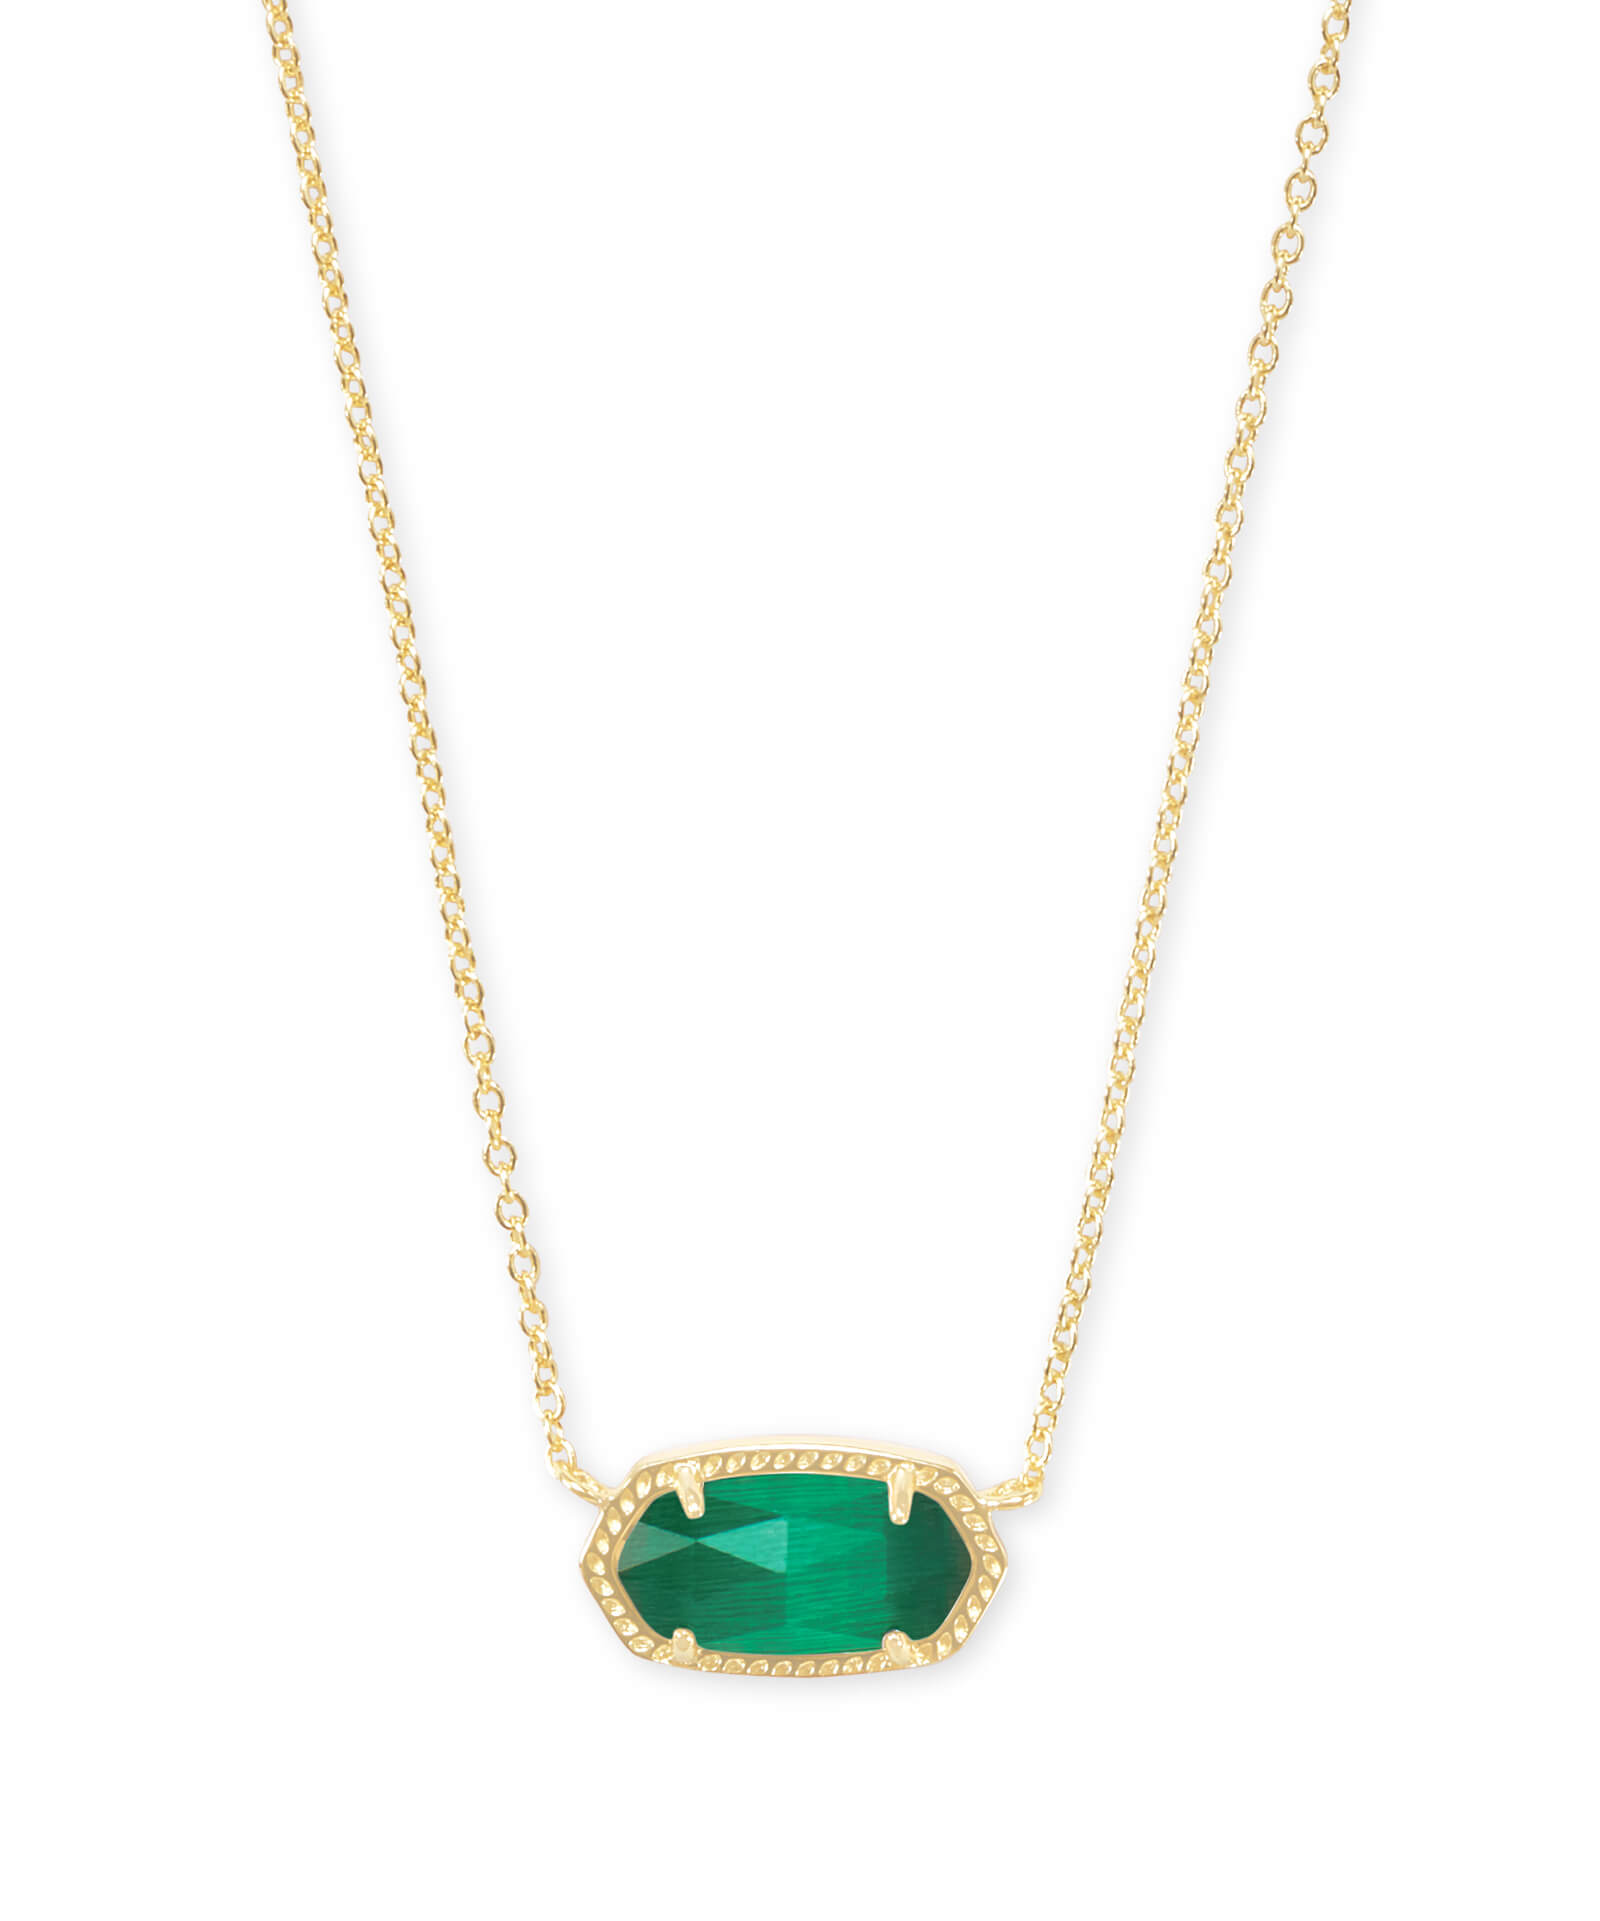 Elisa Gold Pendant Necklace in Emerald Cat's Eye | Kendra Scott